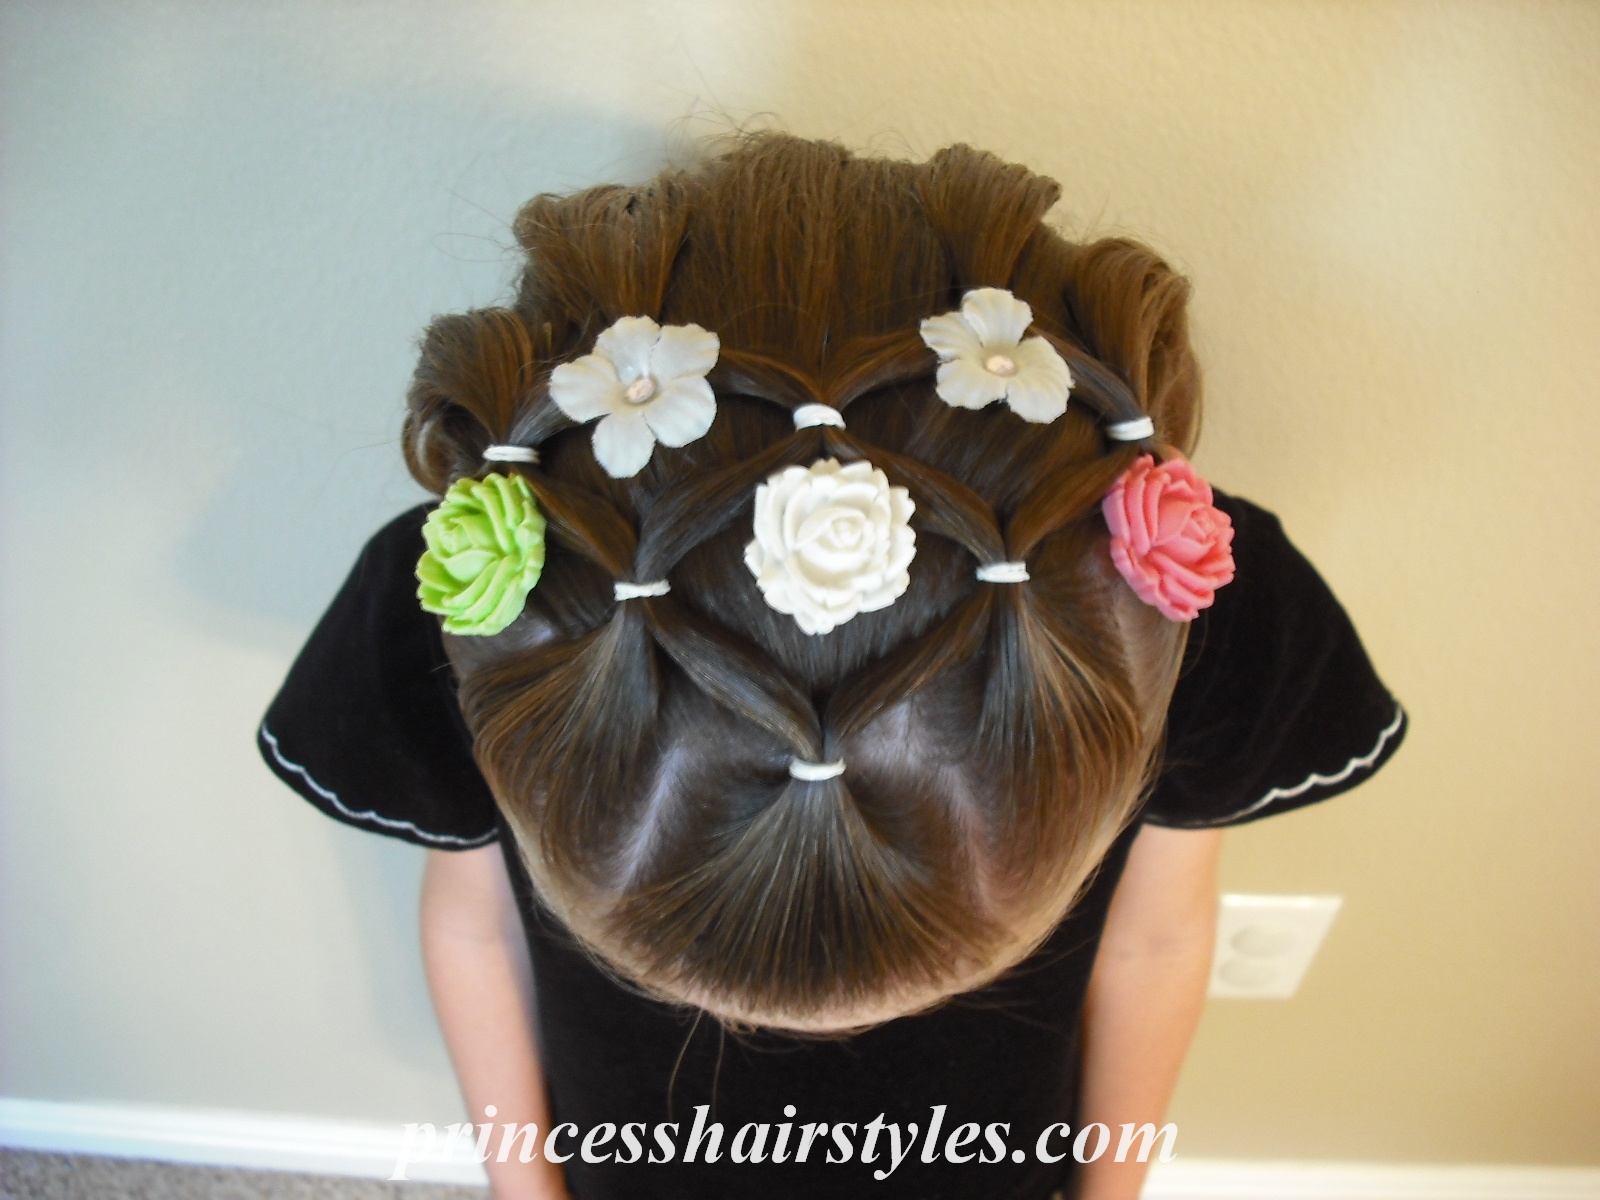 Creative Ideas - DIY Chic Flower Petal Updo Hairstyle